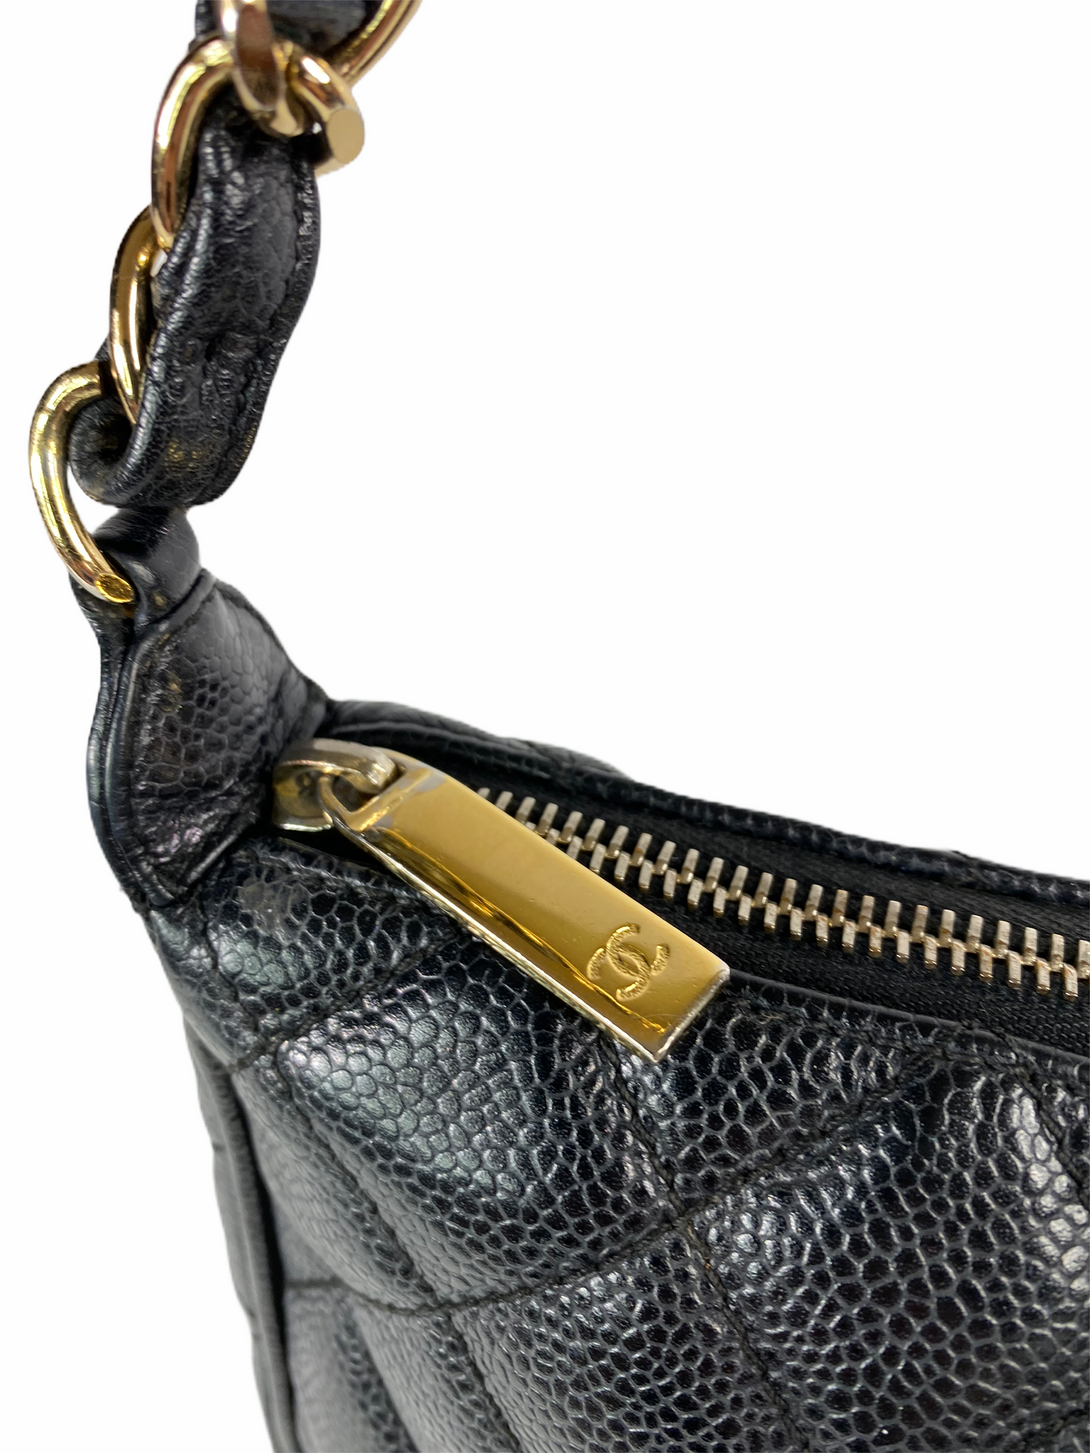 Chanel Black Caviar Leather Shoulder Bag - As Seen on Instagram 26/08/2020 - Siopaella Designer Exchange